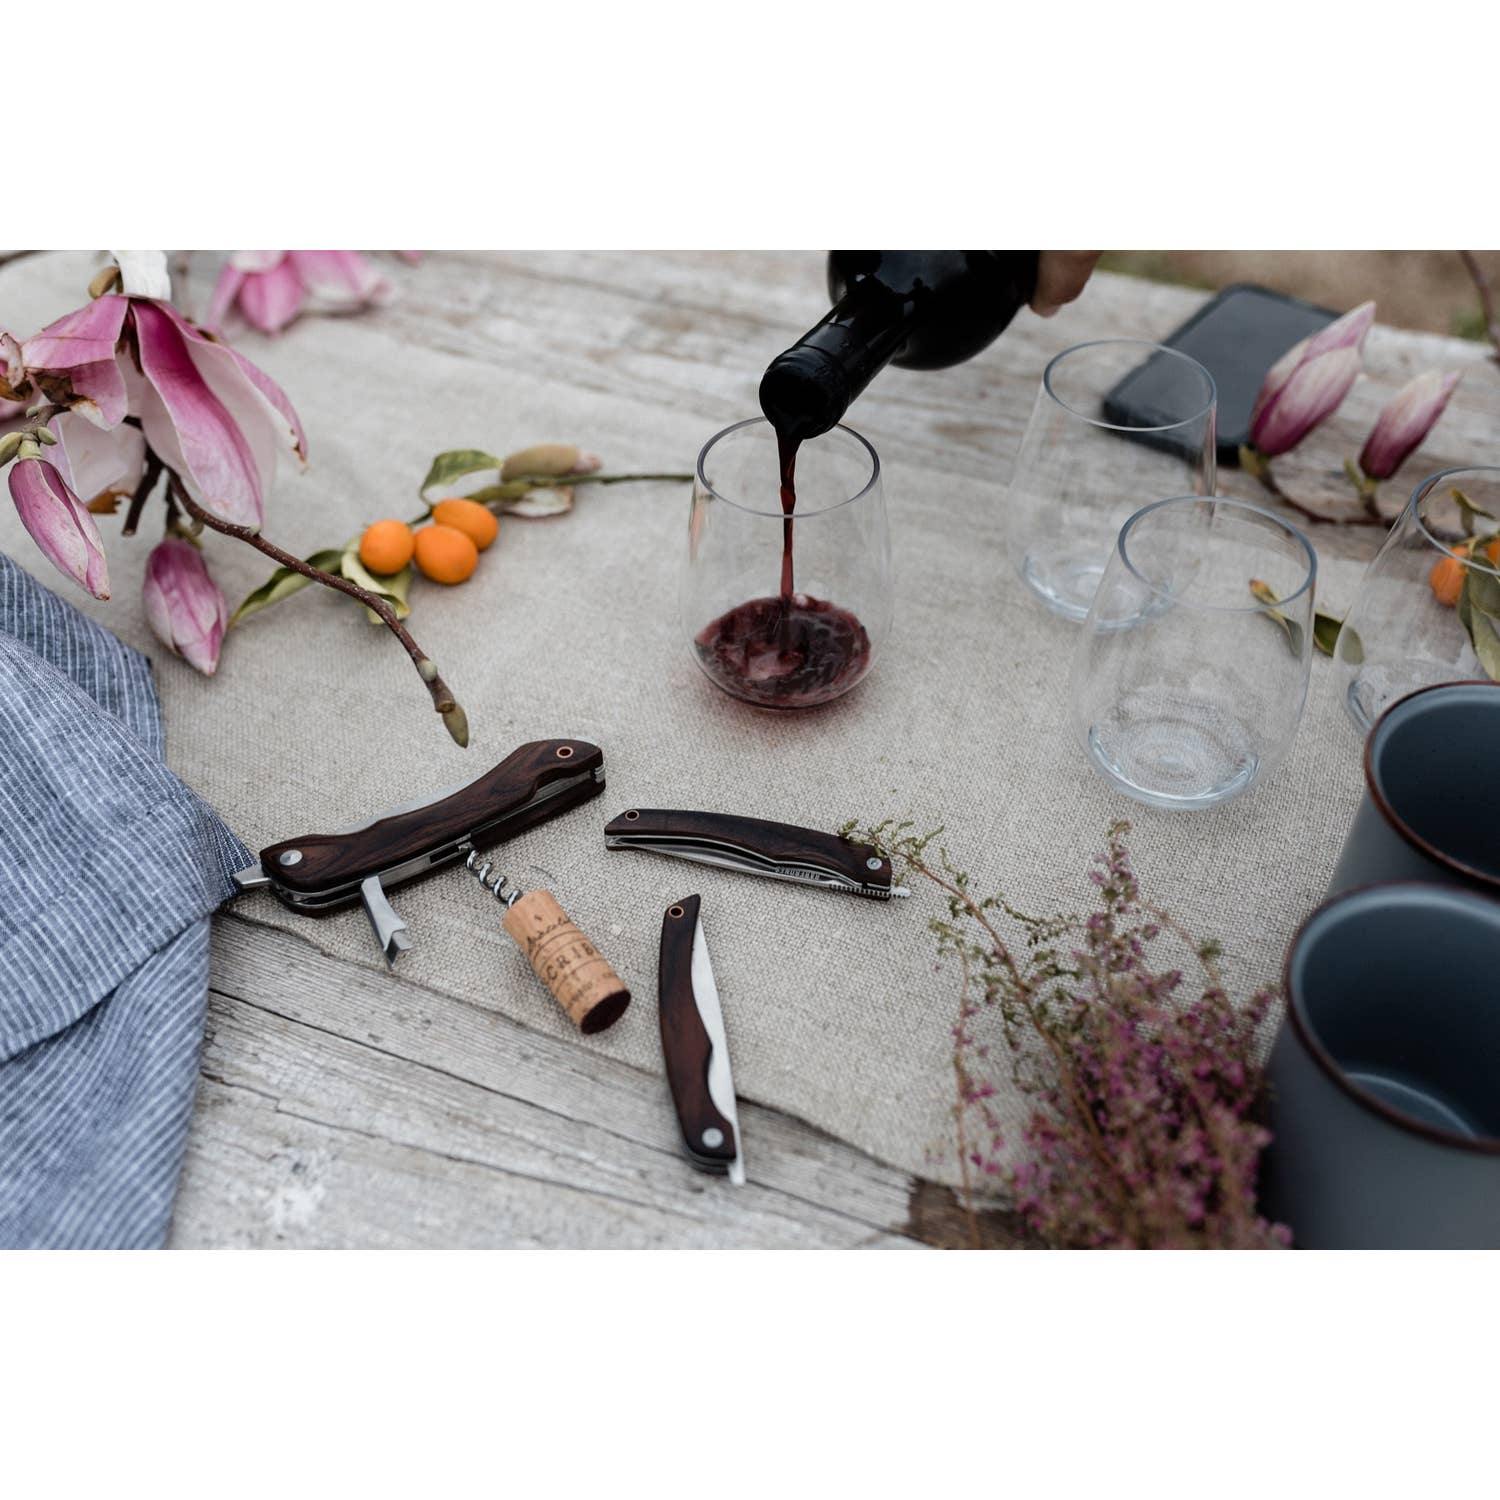 Barebones | Shatterproof Tritan Wine Travel Picnic Tumblers (Set of 2), Wine Glass, Barebones, Defiance Outdoor Gear Co.